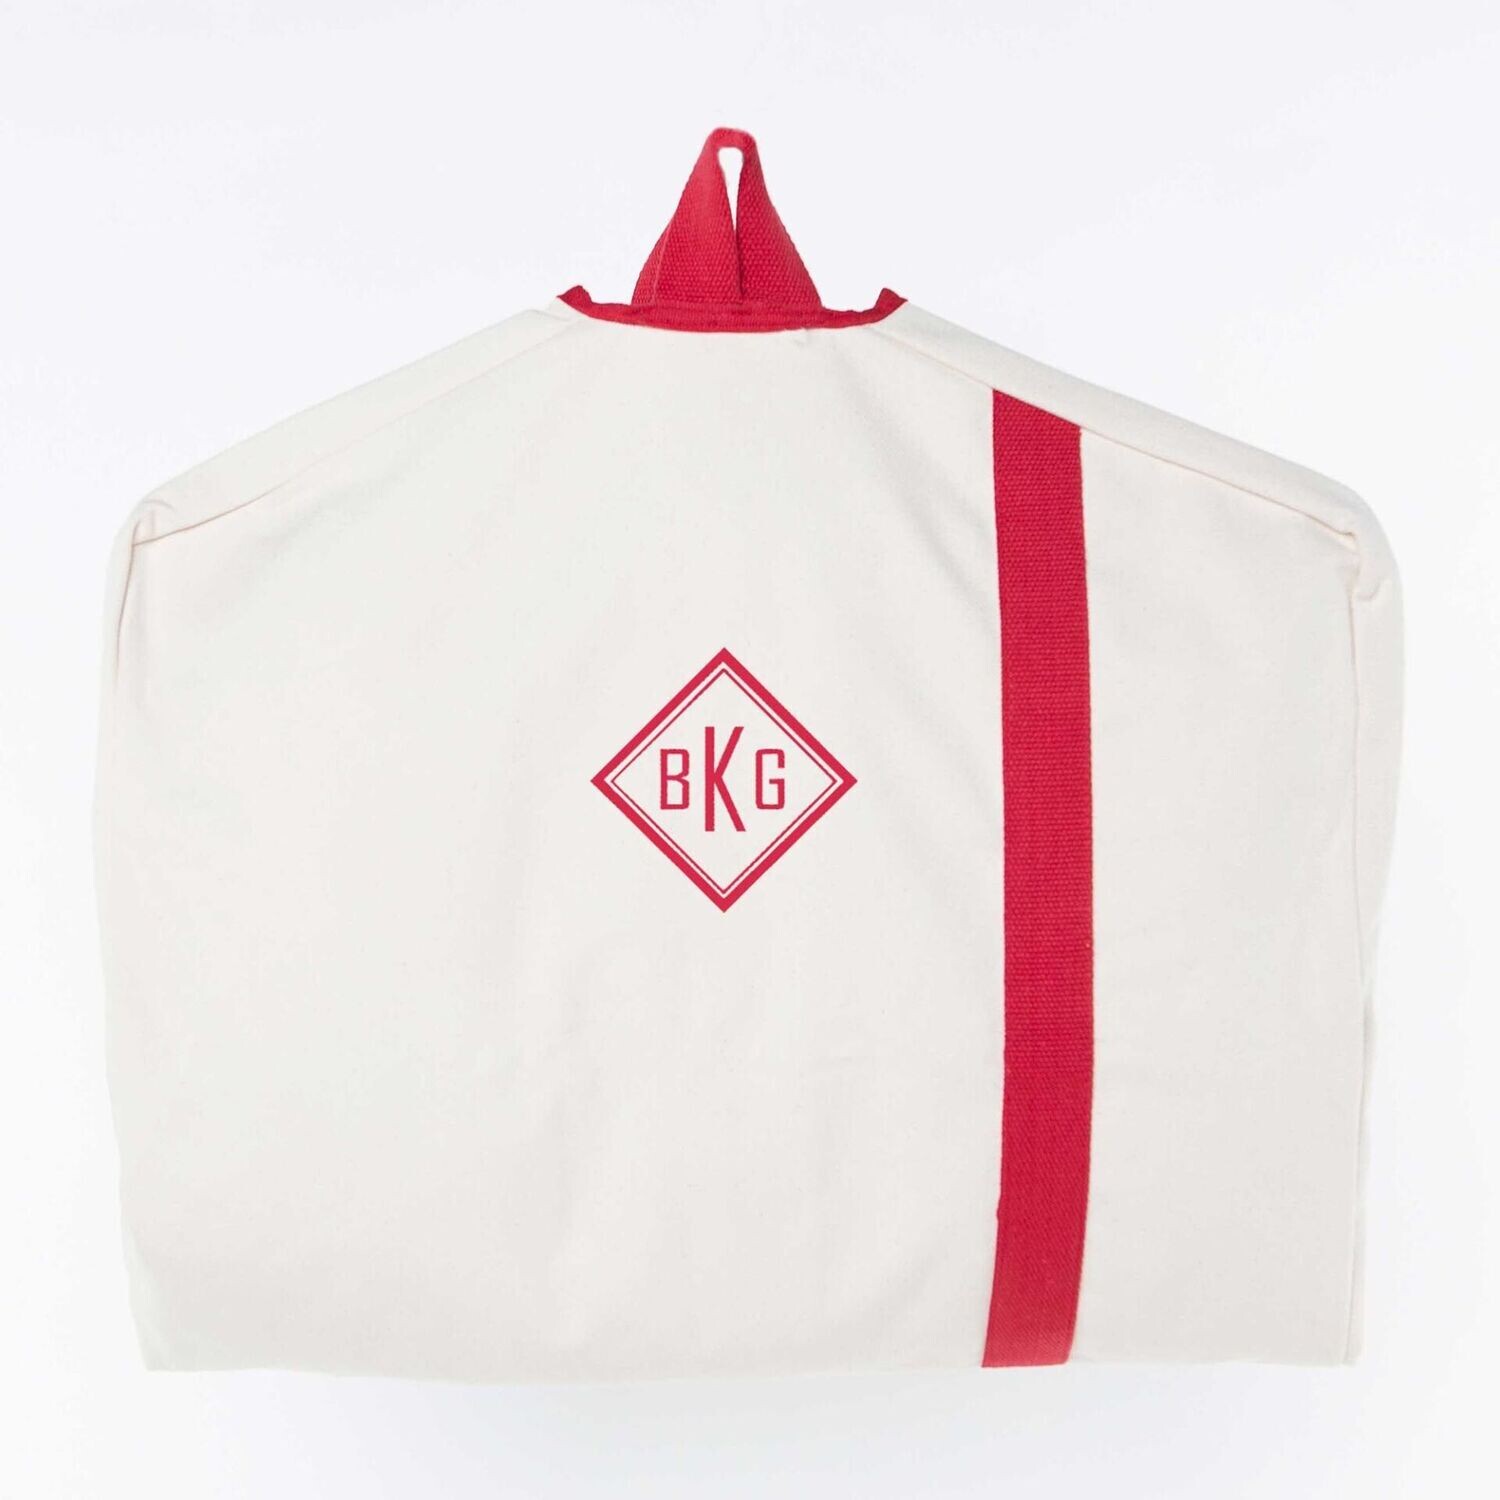 Garment Bag - Red Trim